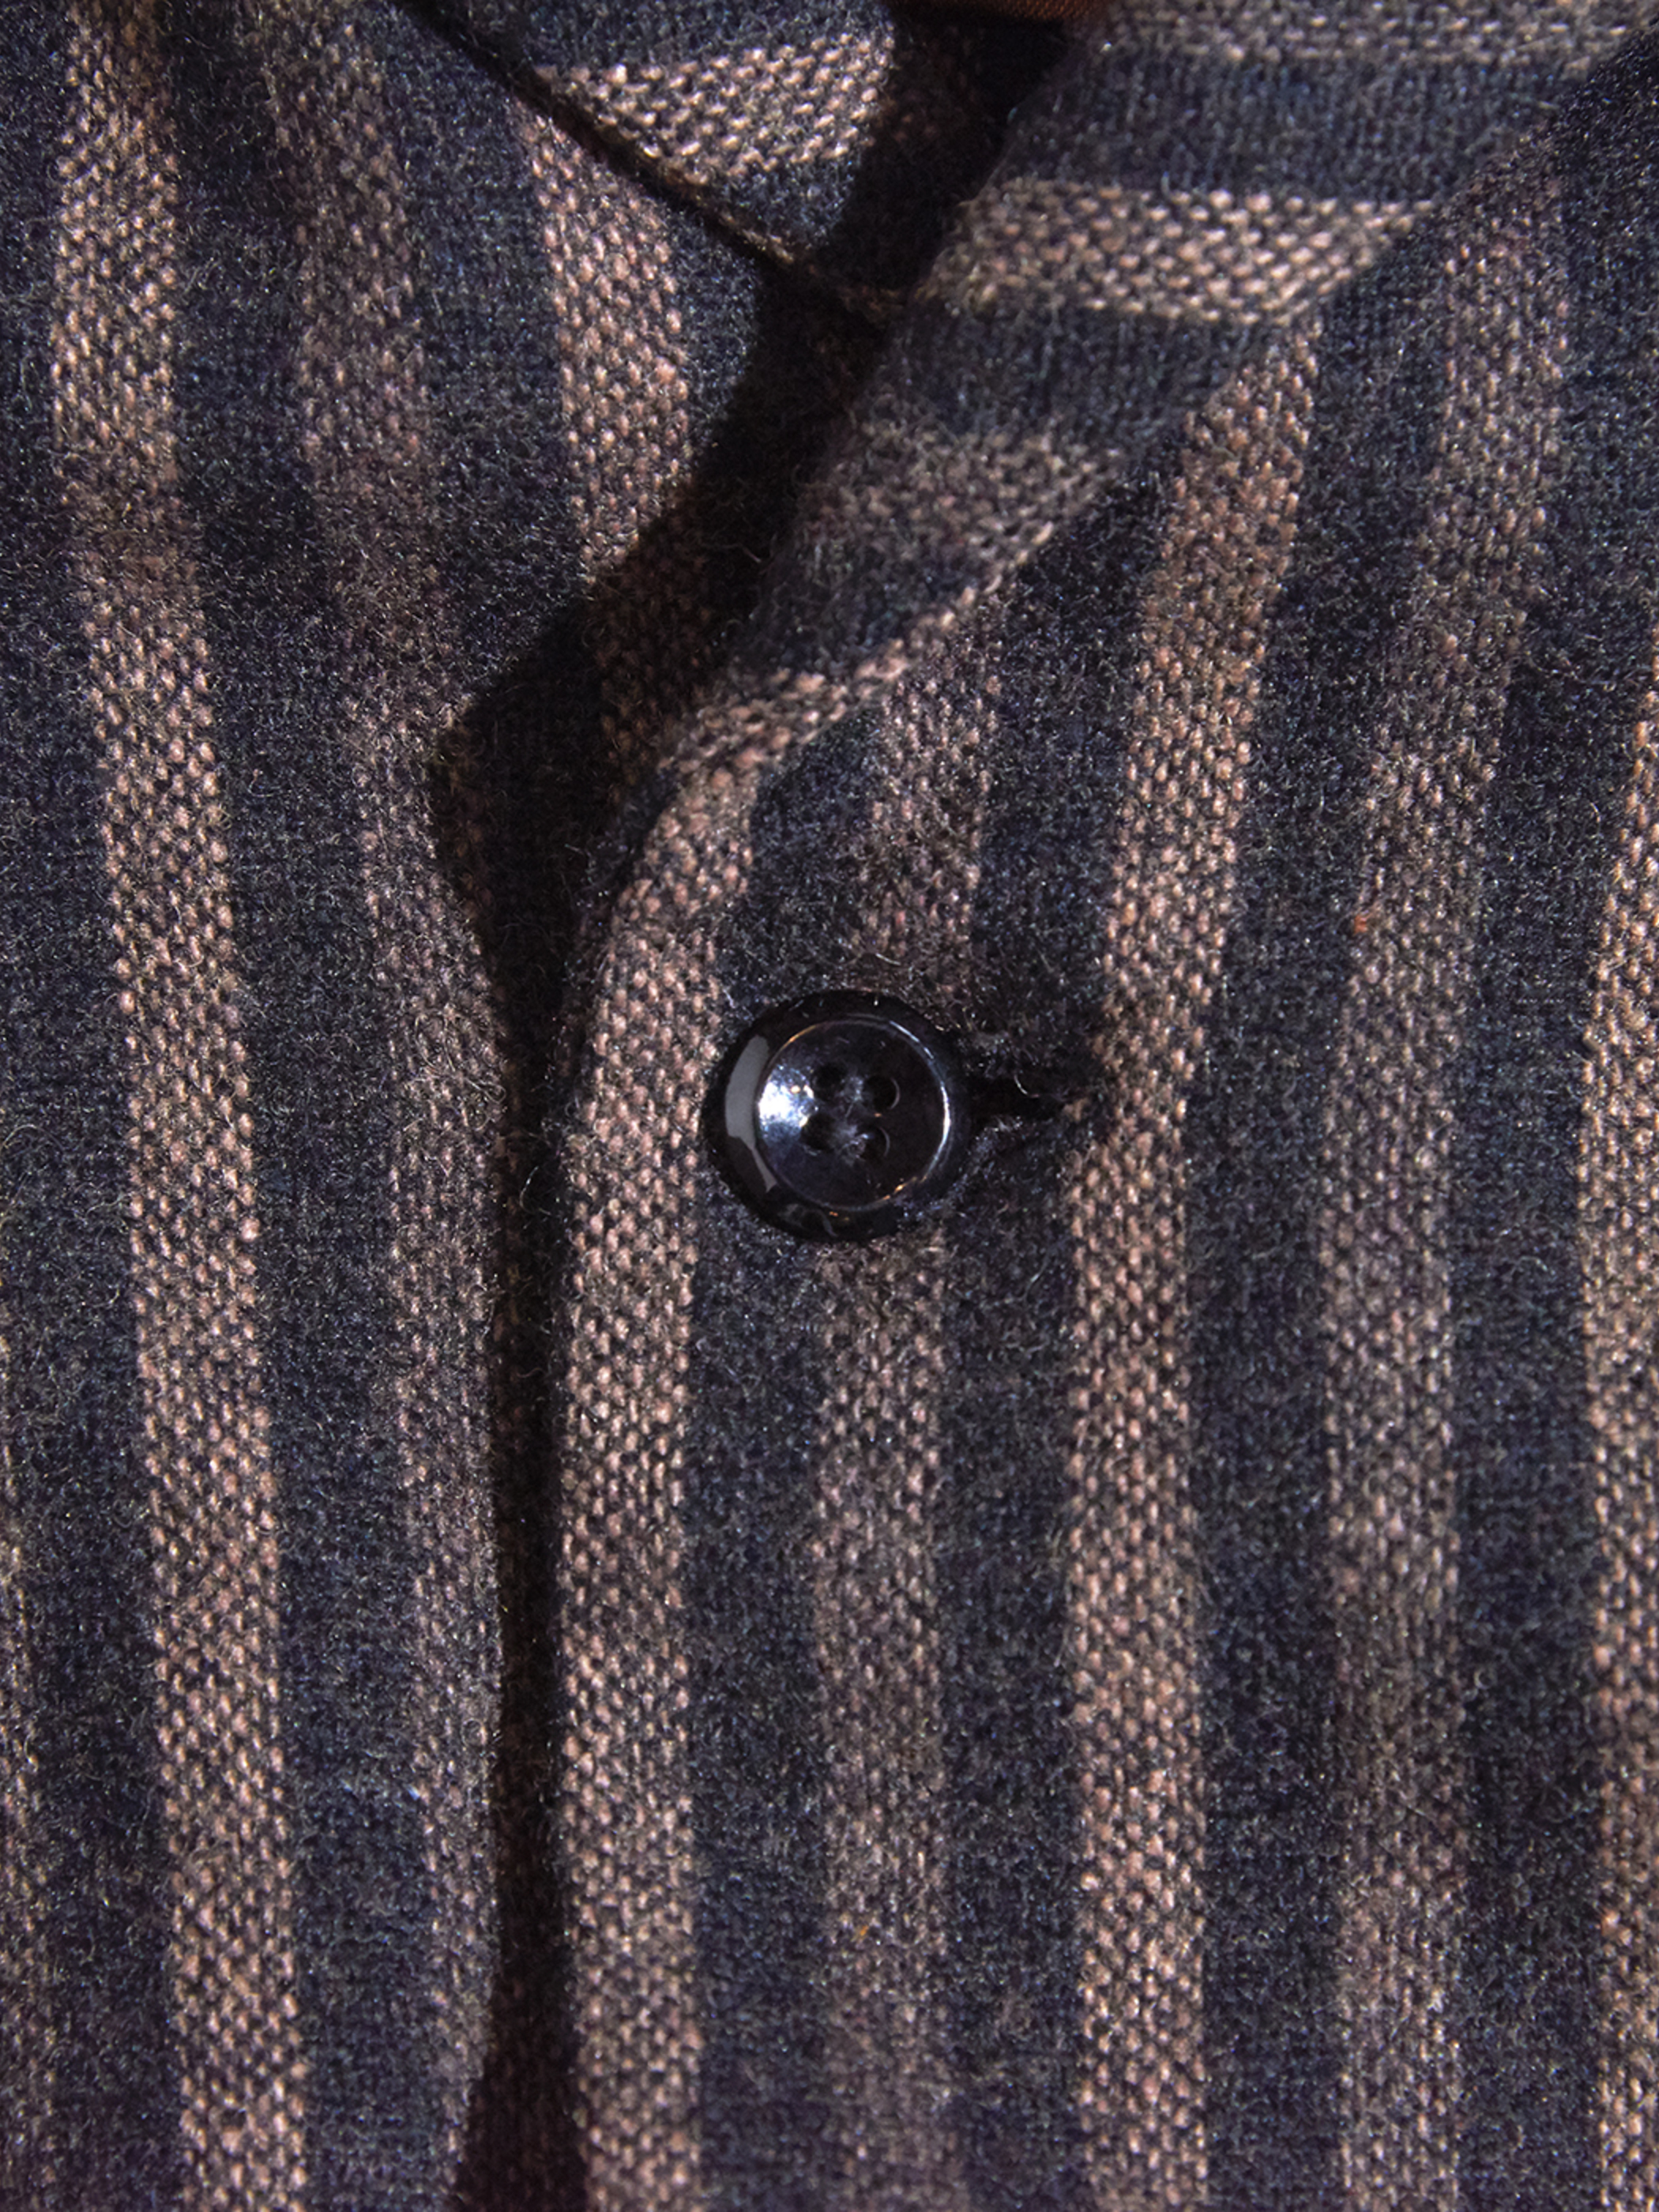 1960s "unknown" s/s wool stripe shirt -BROWN-